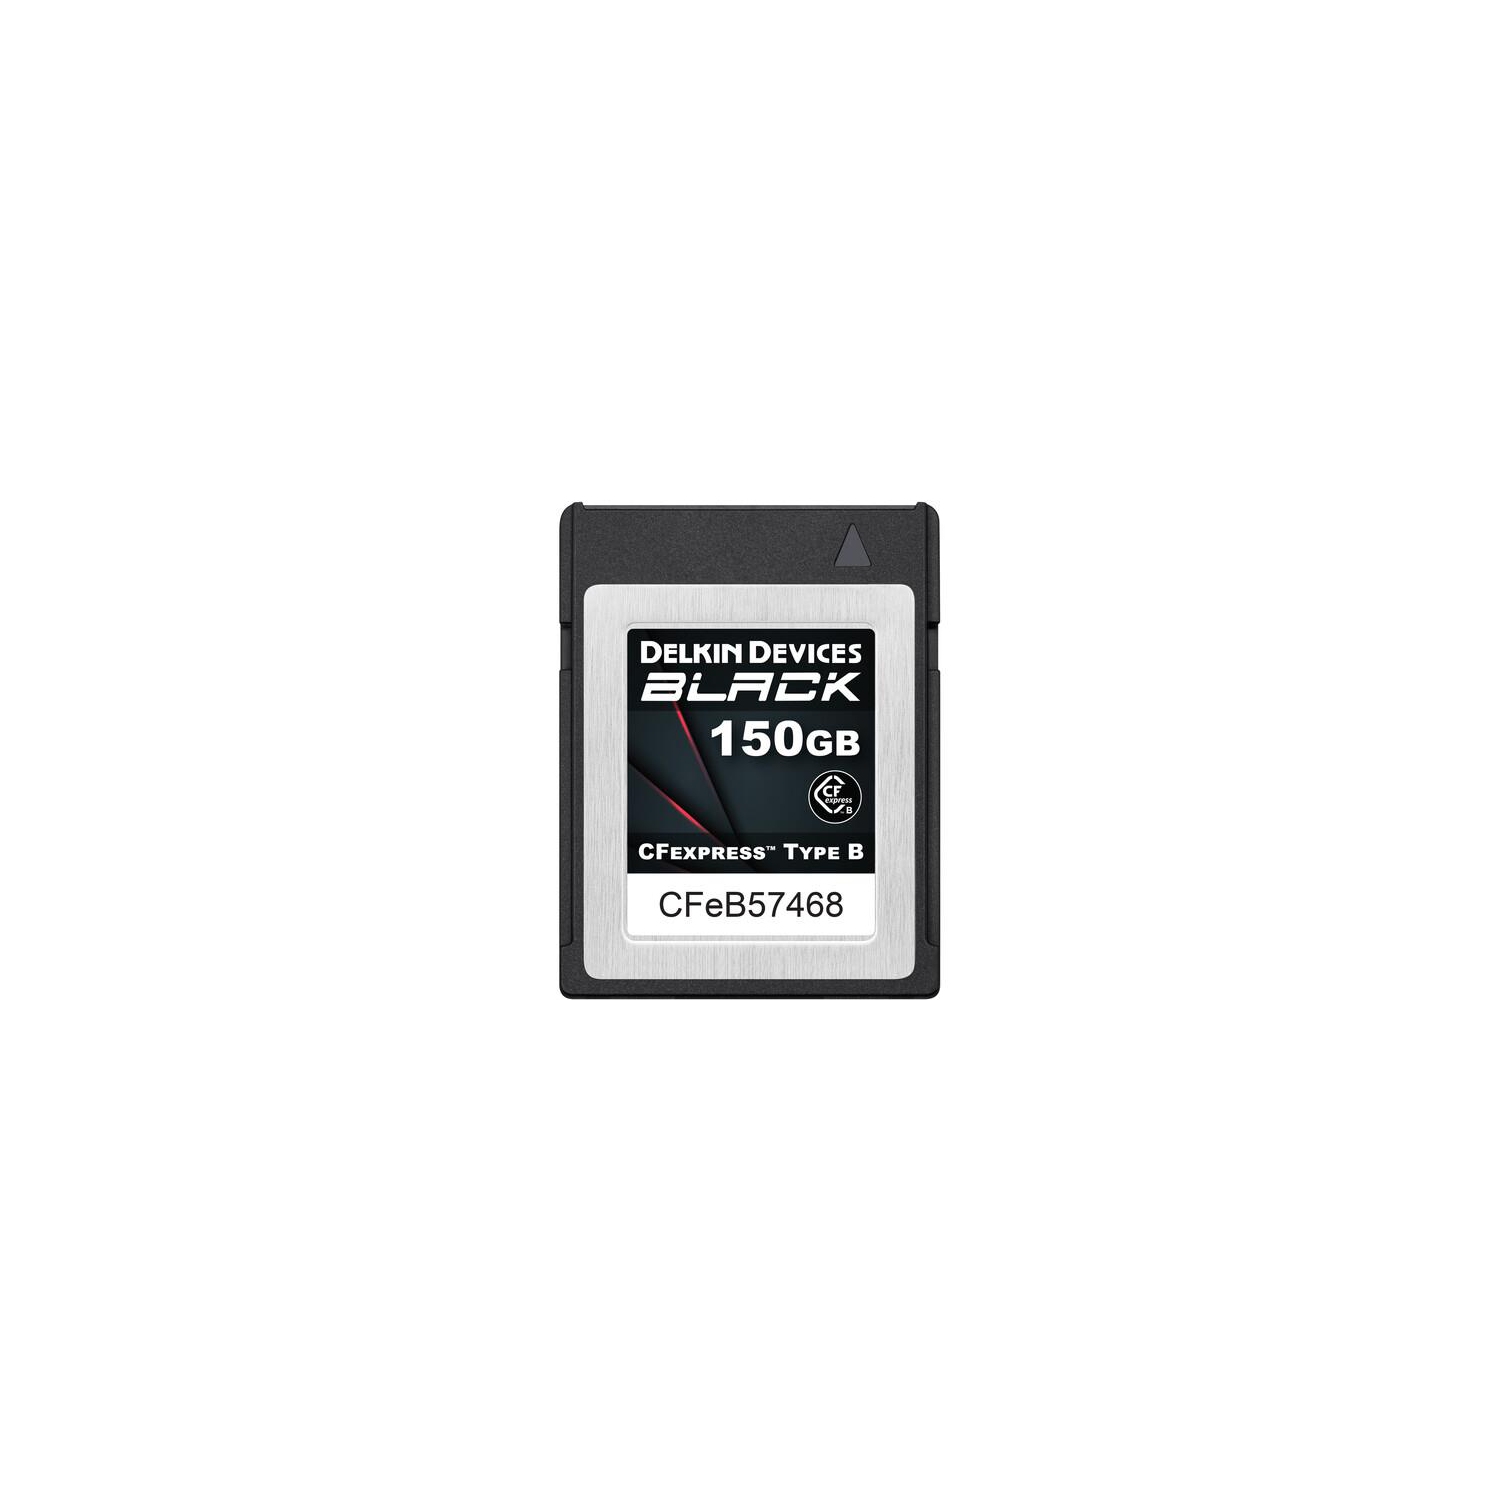 Delkin 150GB BLACK CFexpress Type B Memory Card